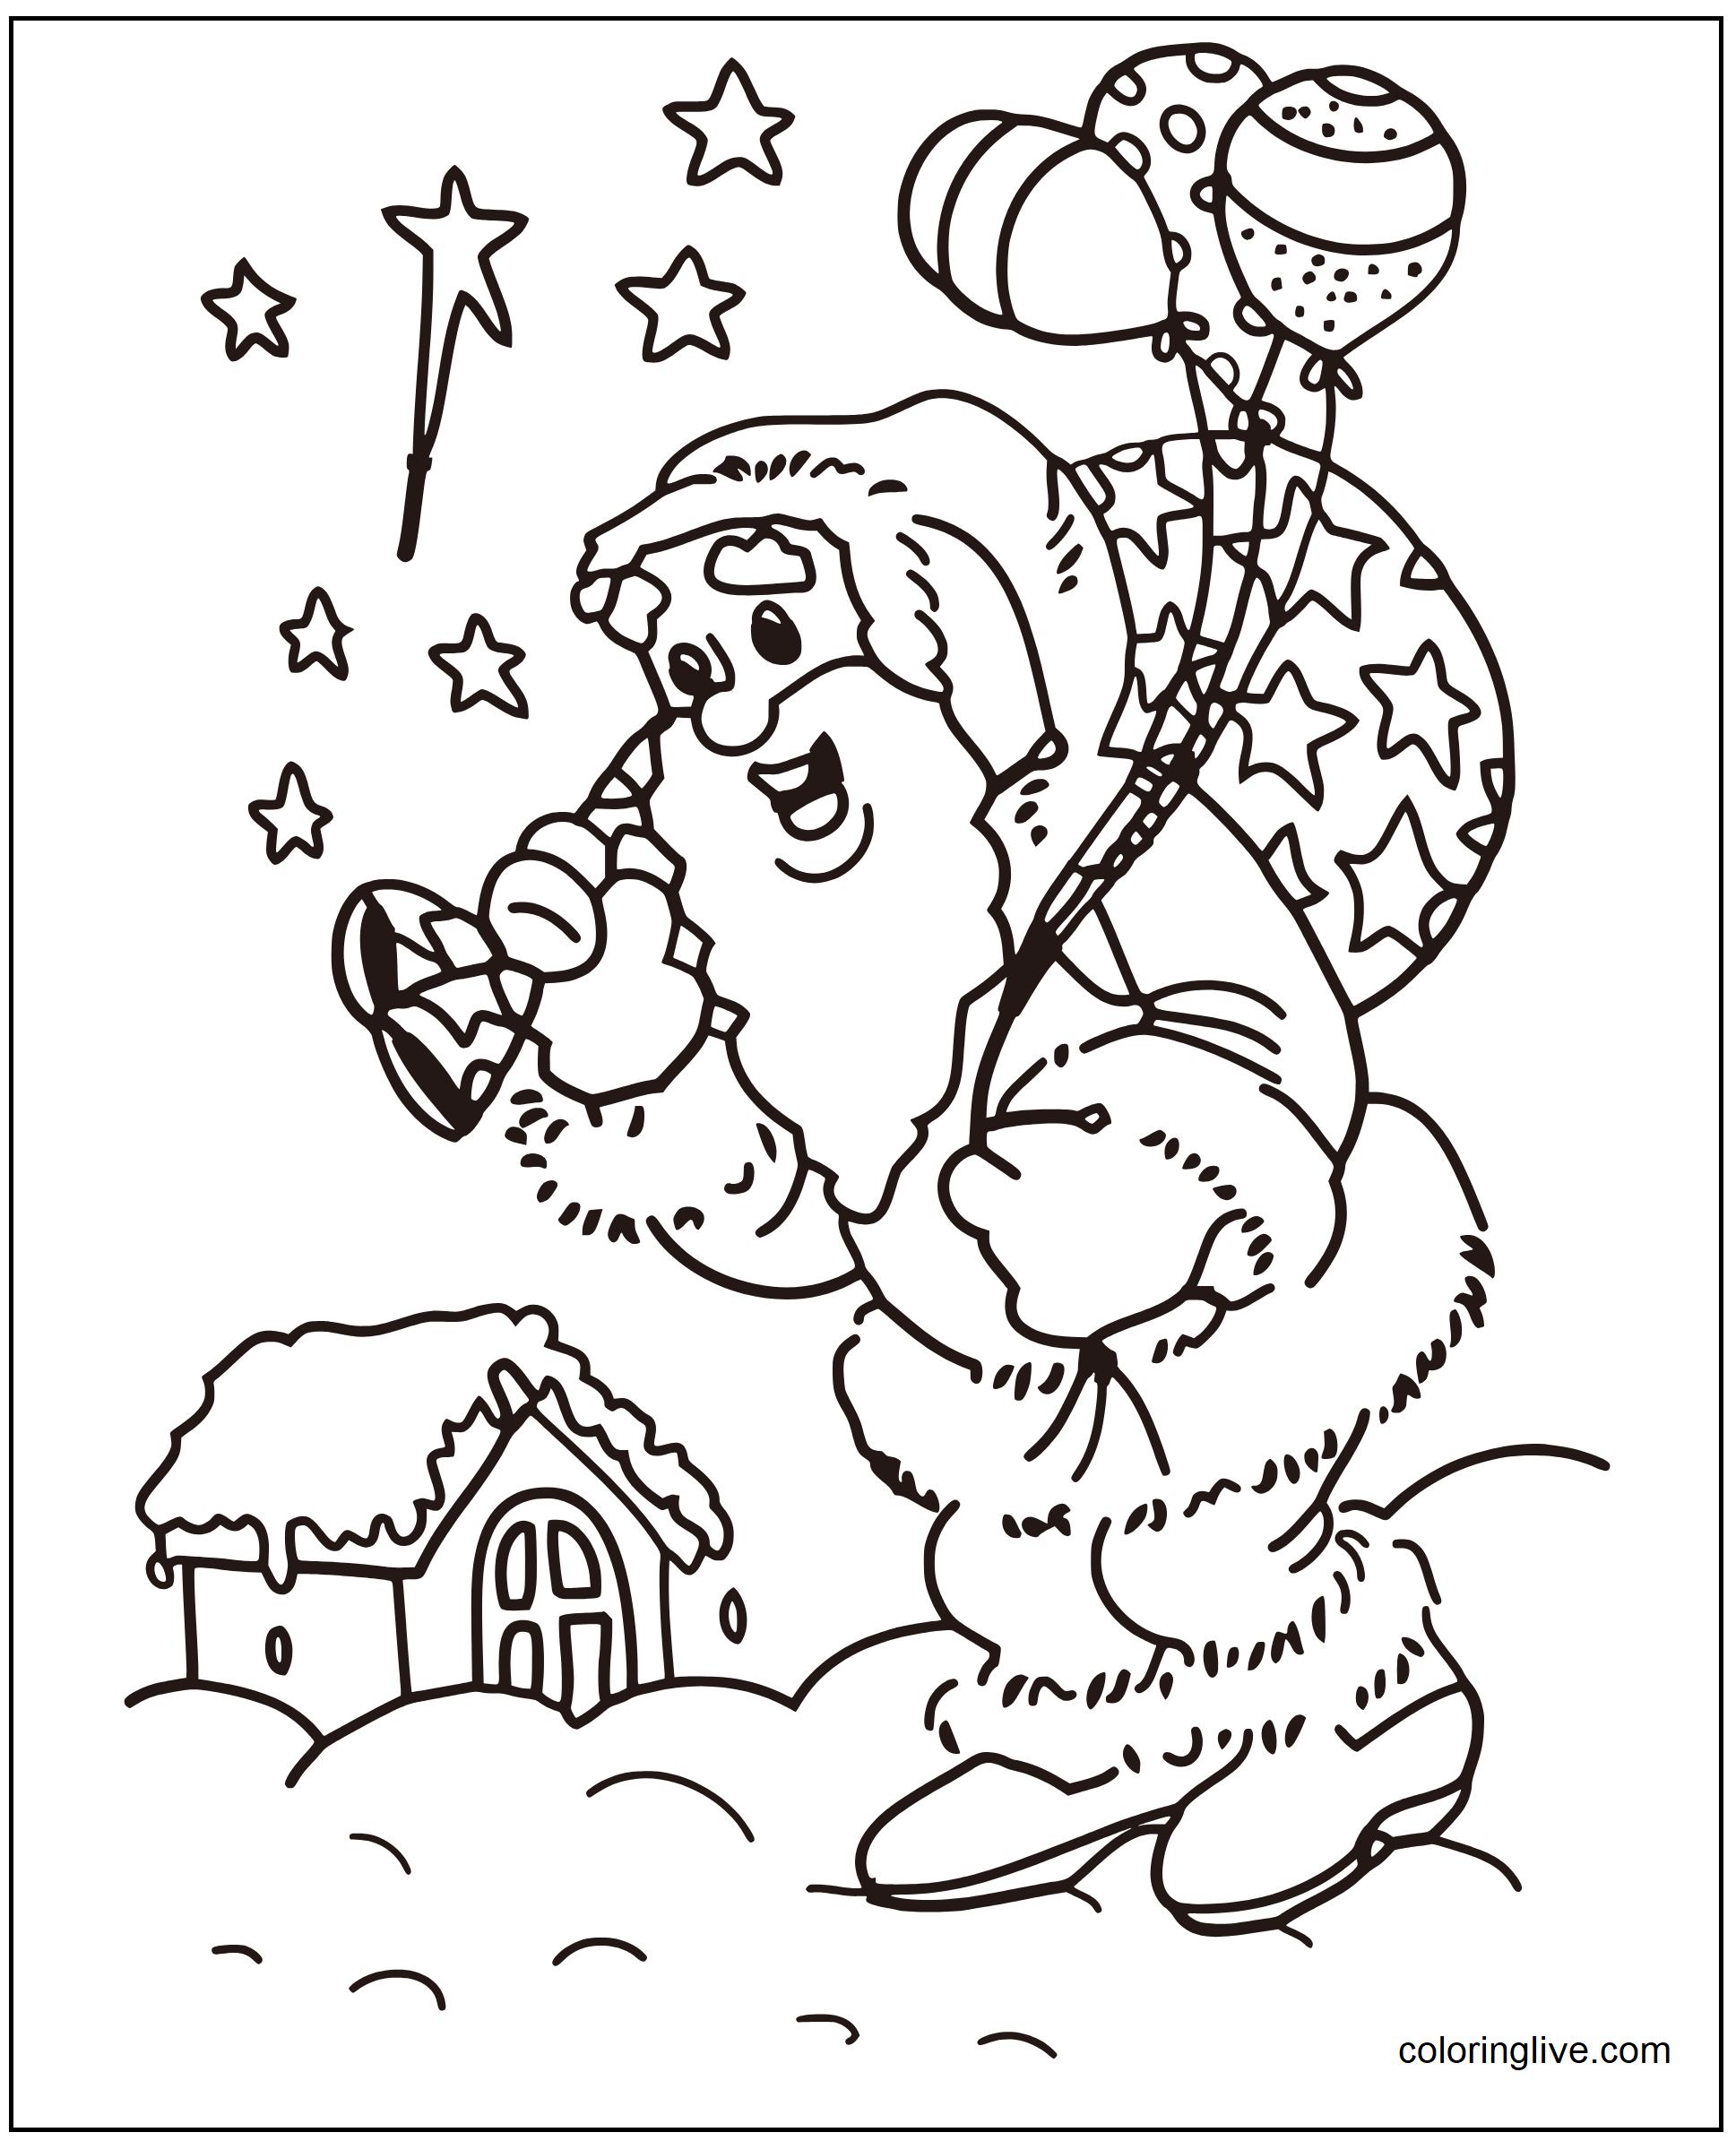 Printable Santa coming Coloring Page for kids.